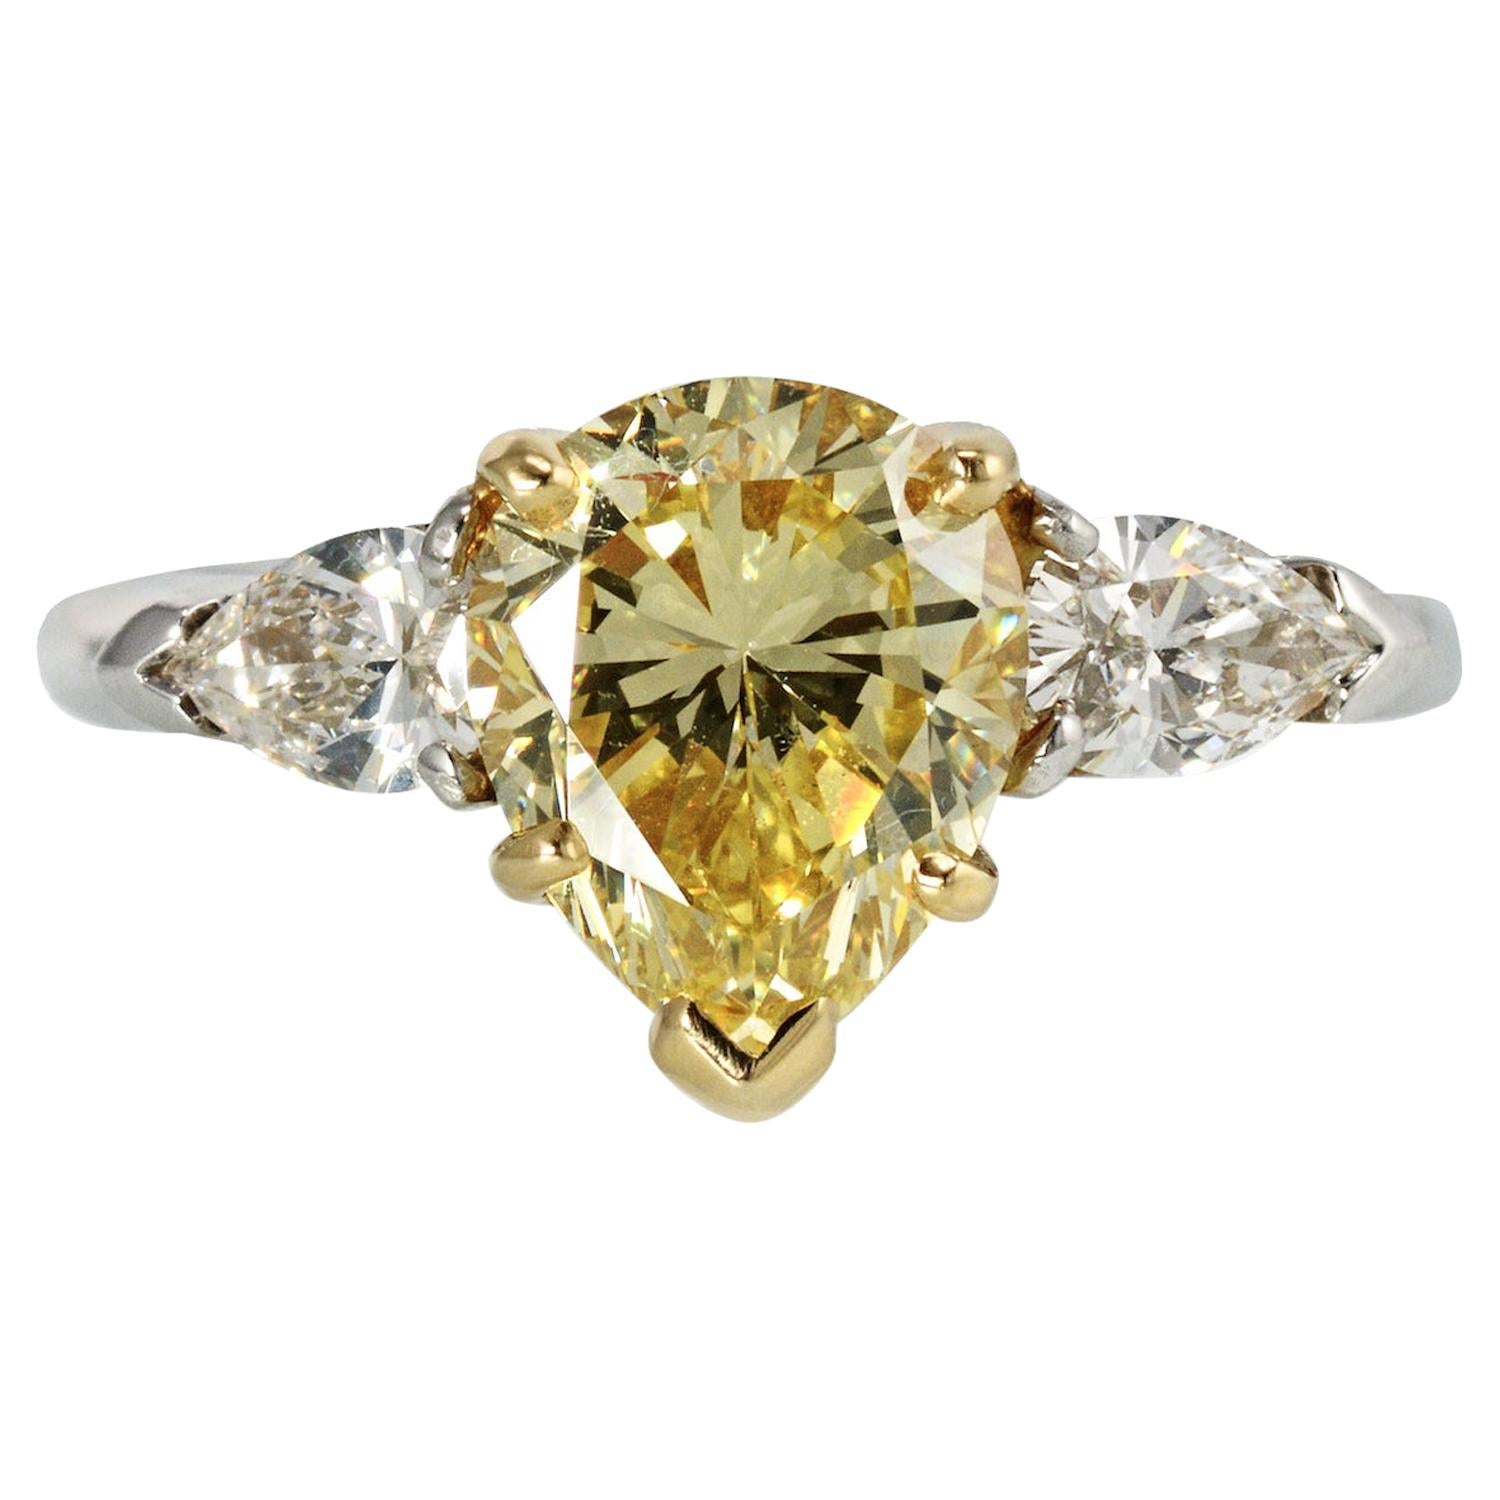 Verlobungsring mit gelbem, intensiv gelbem, birnenförmigem Diamanten